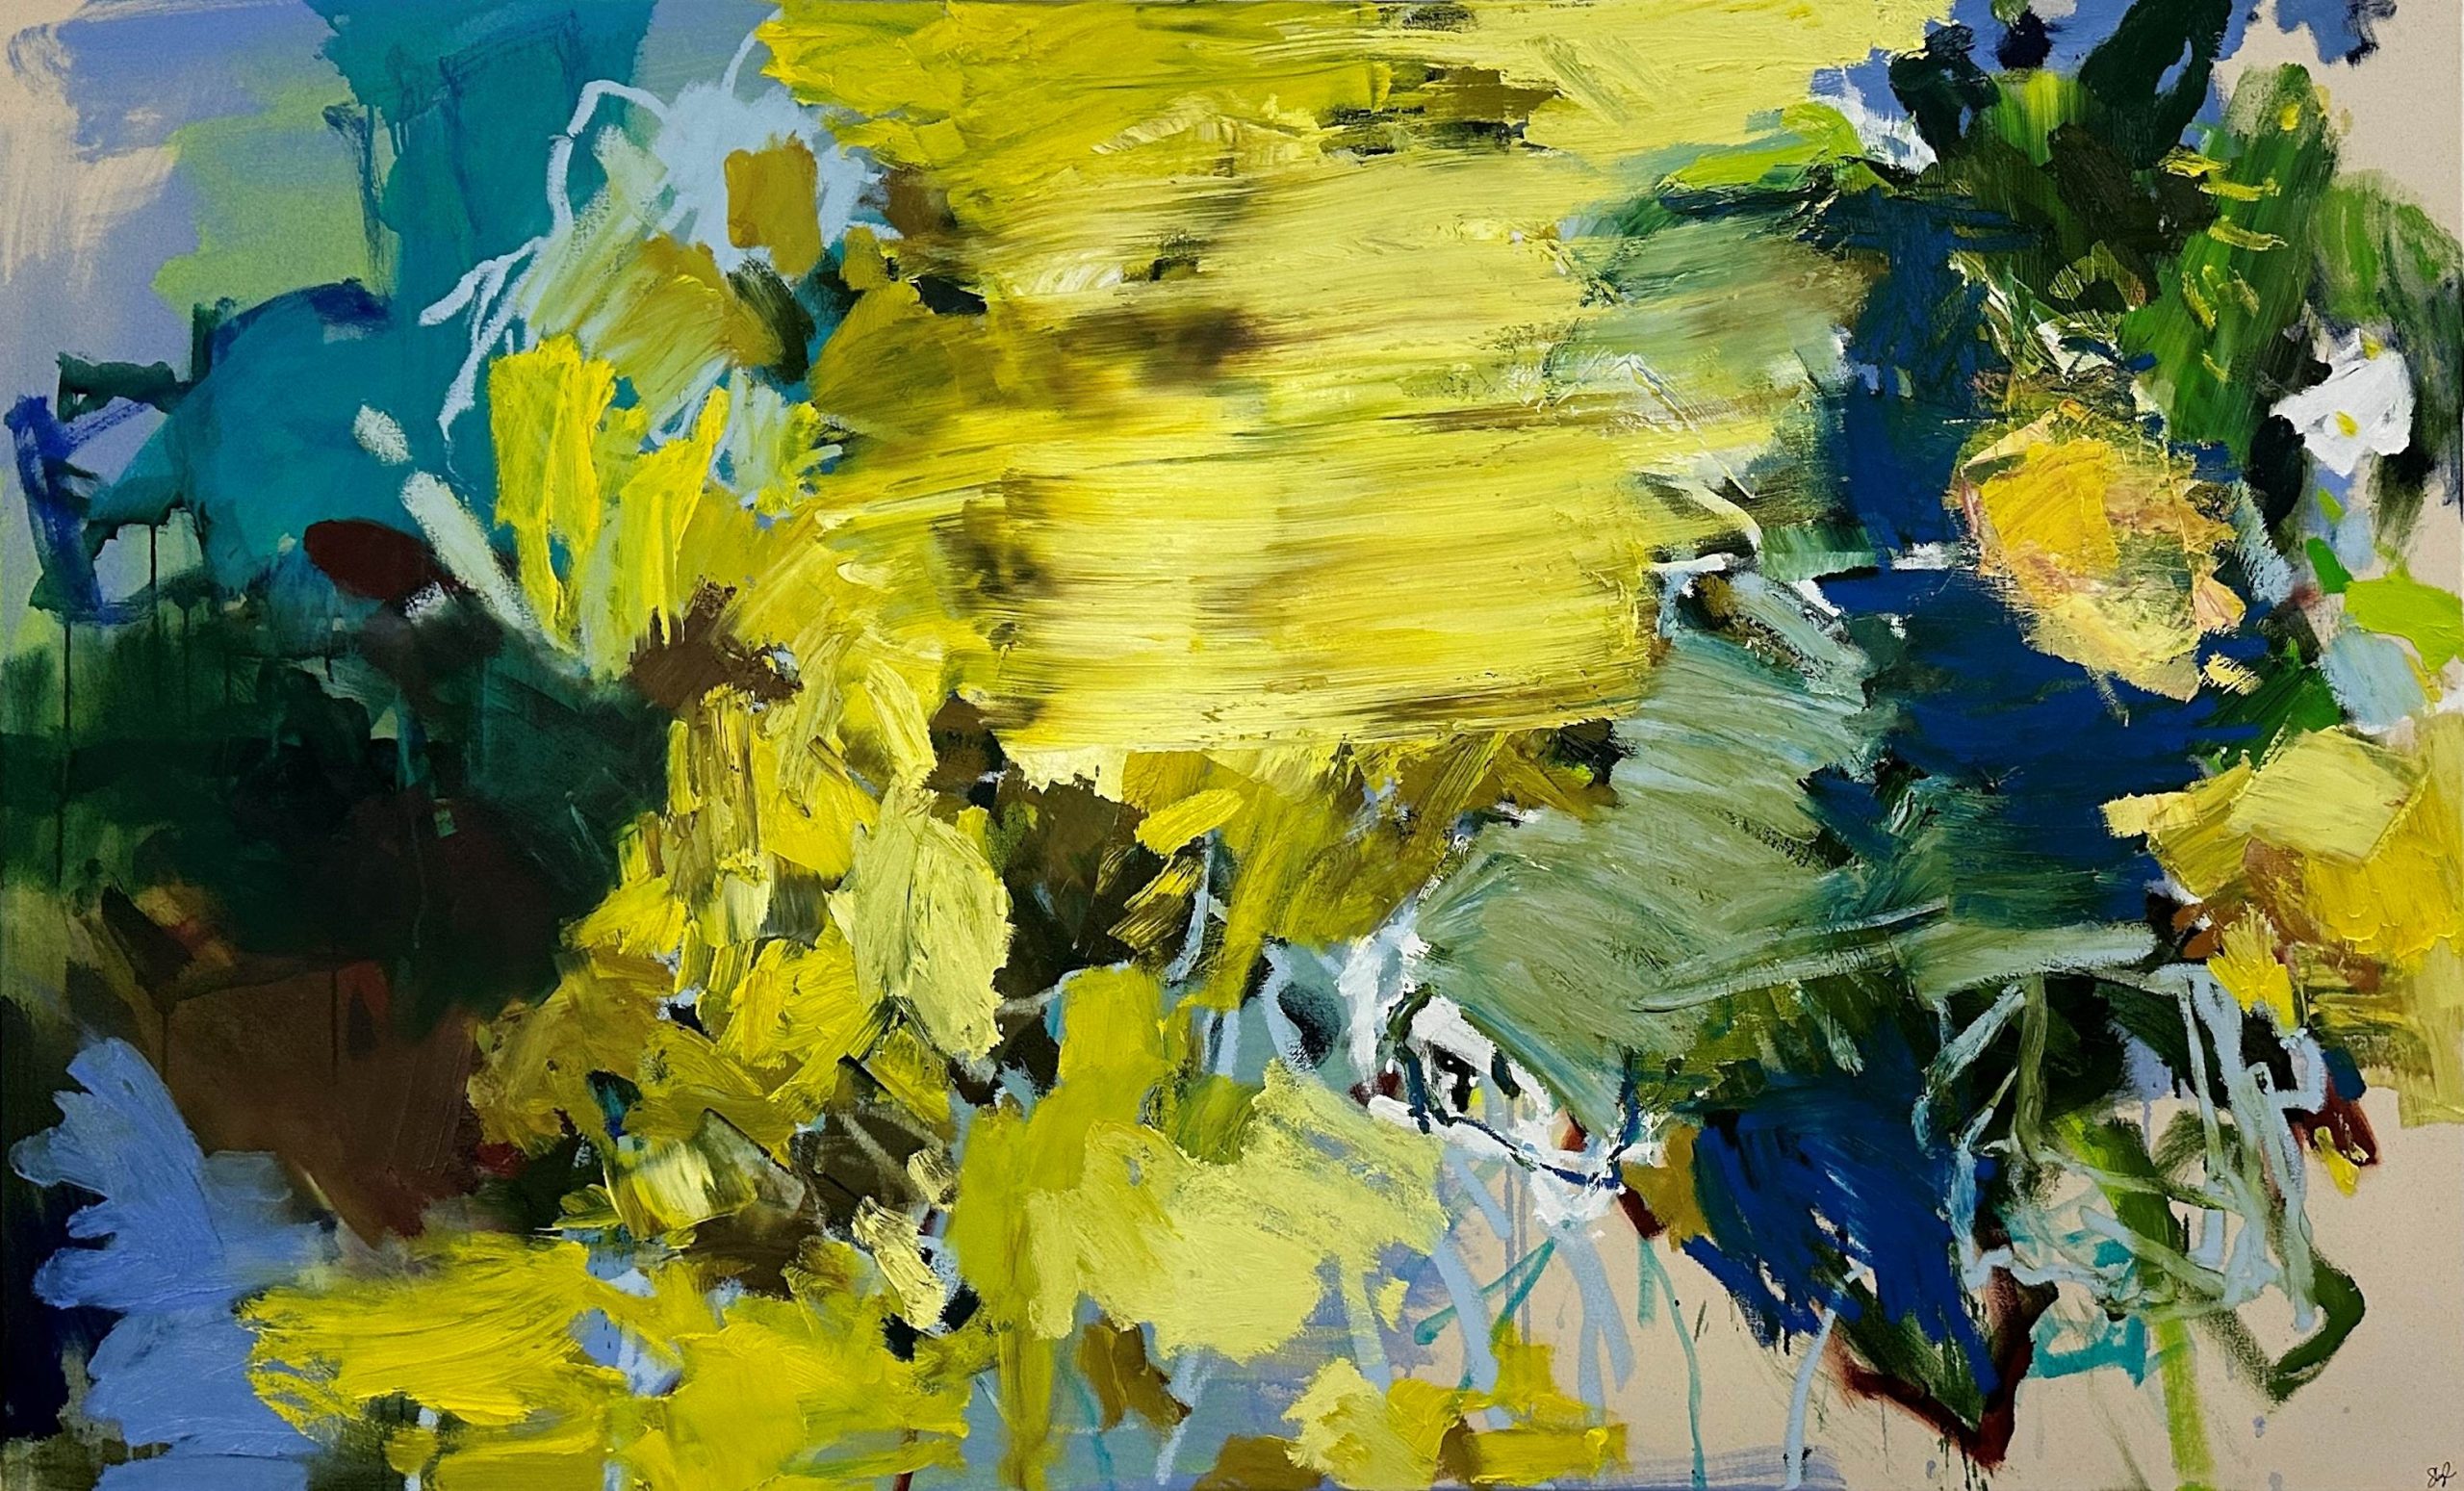 Llewellyn Skye 'Stillness In Motion' acrylic, oil and oil stick on canvas 112 x 183cm $10,000